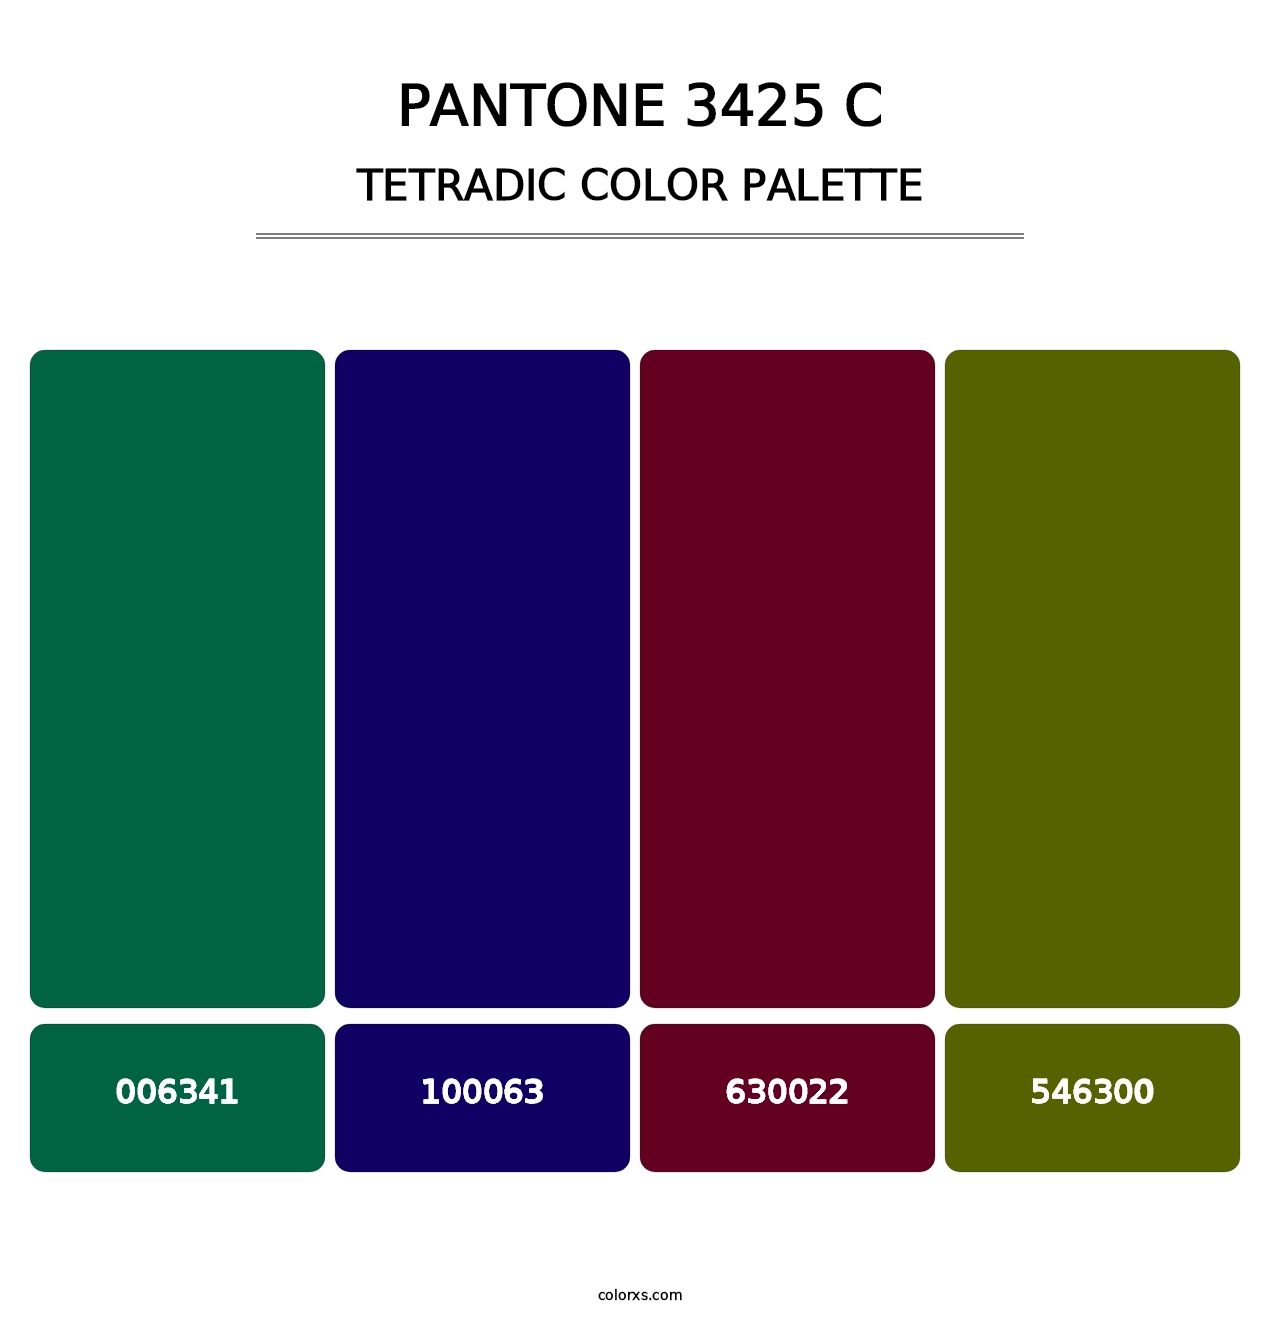 PANTONE 3425 C - Tetradic Color Palette